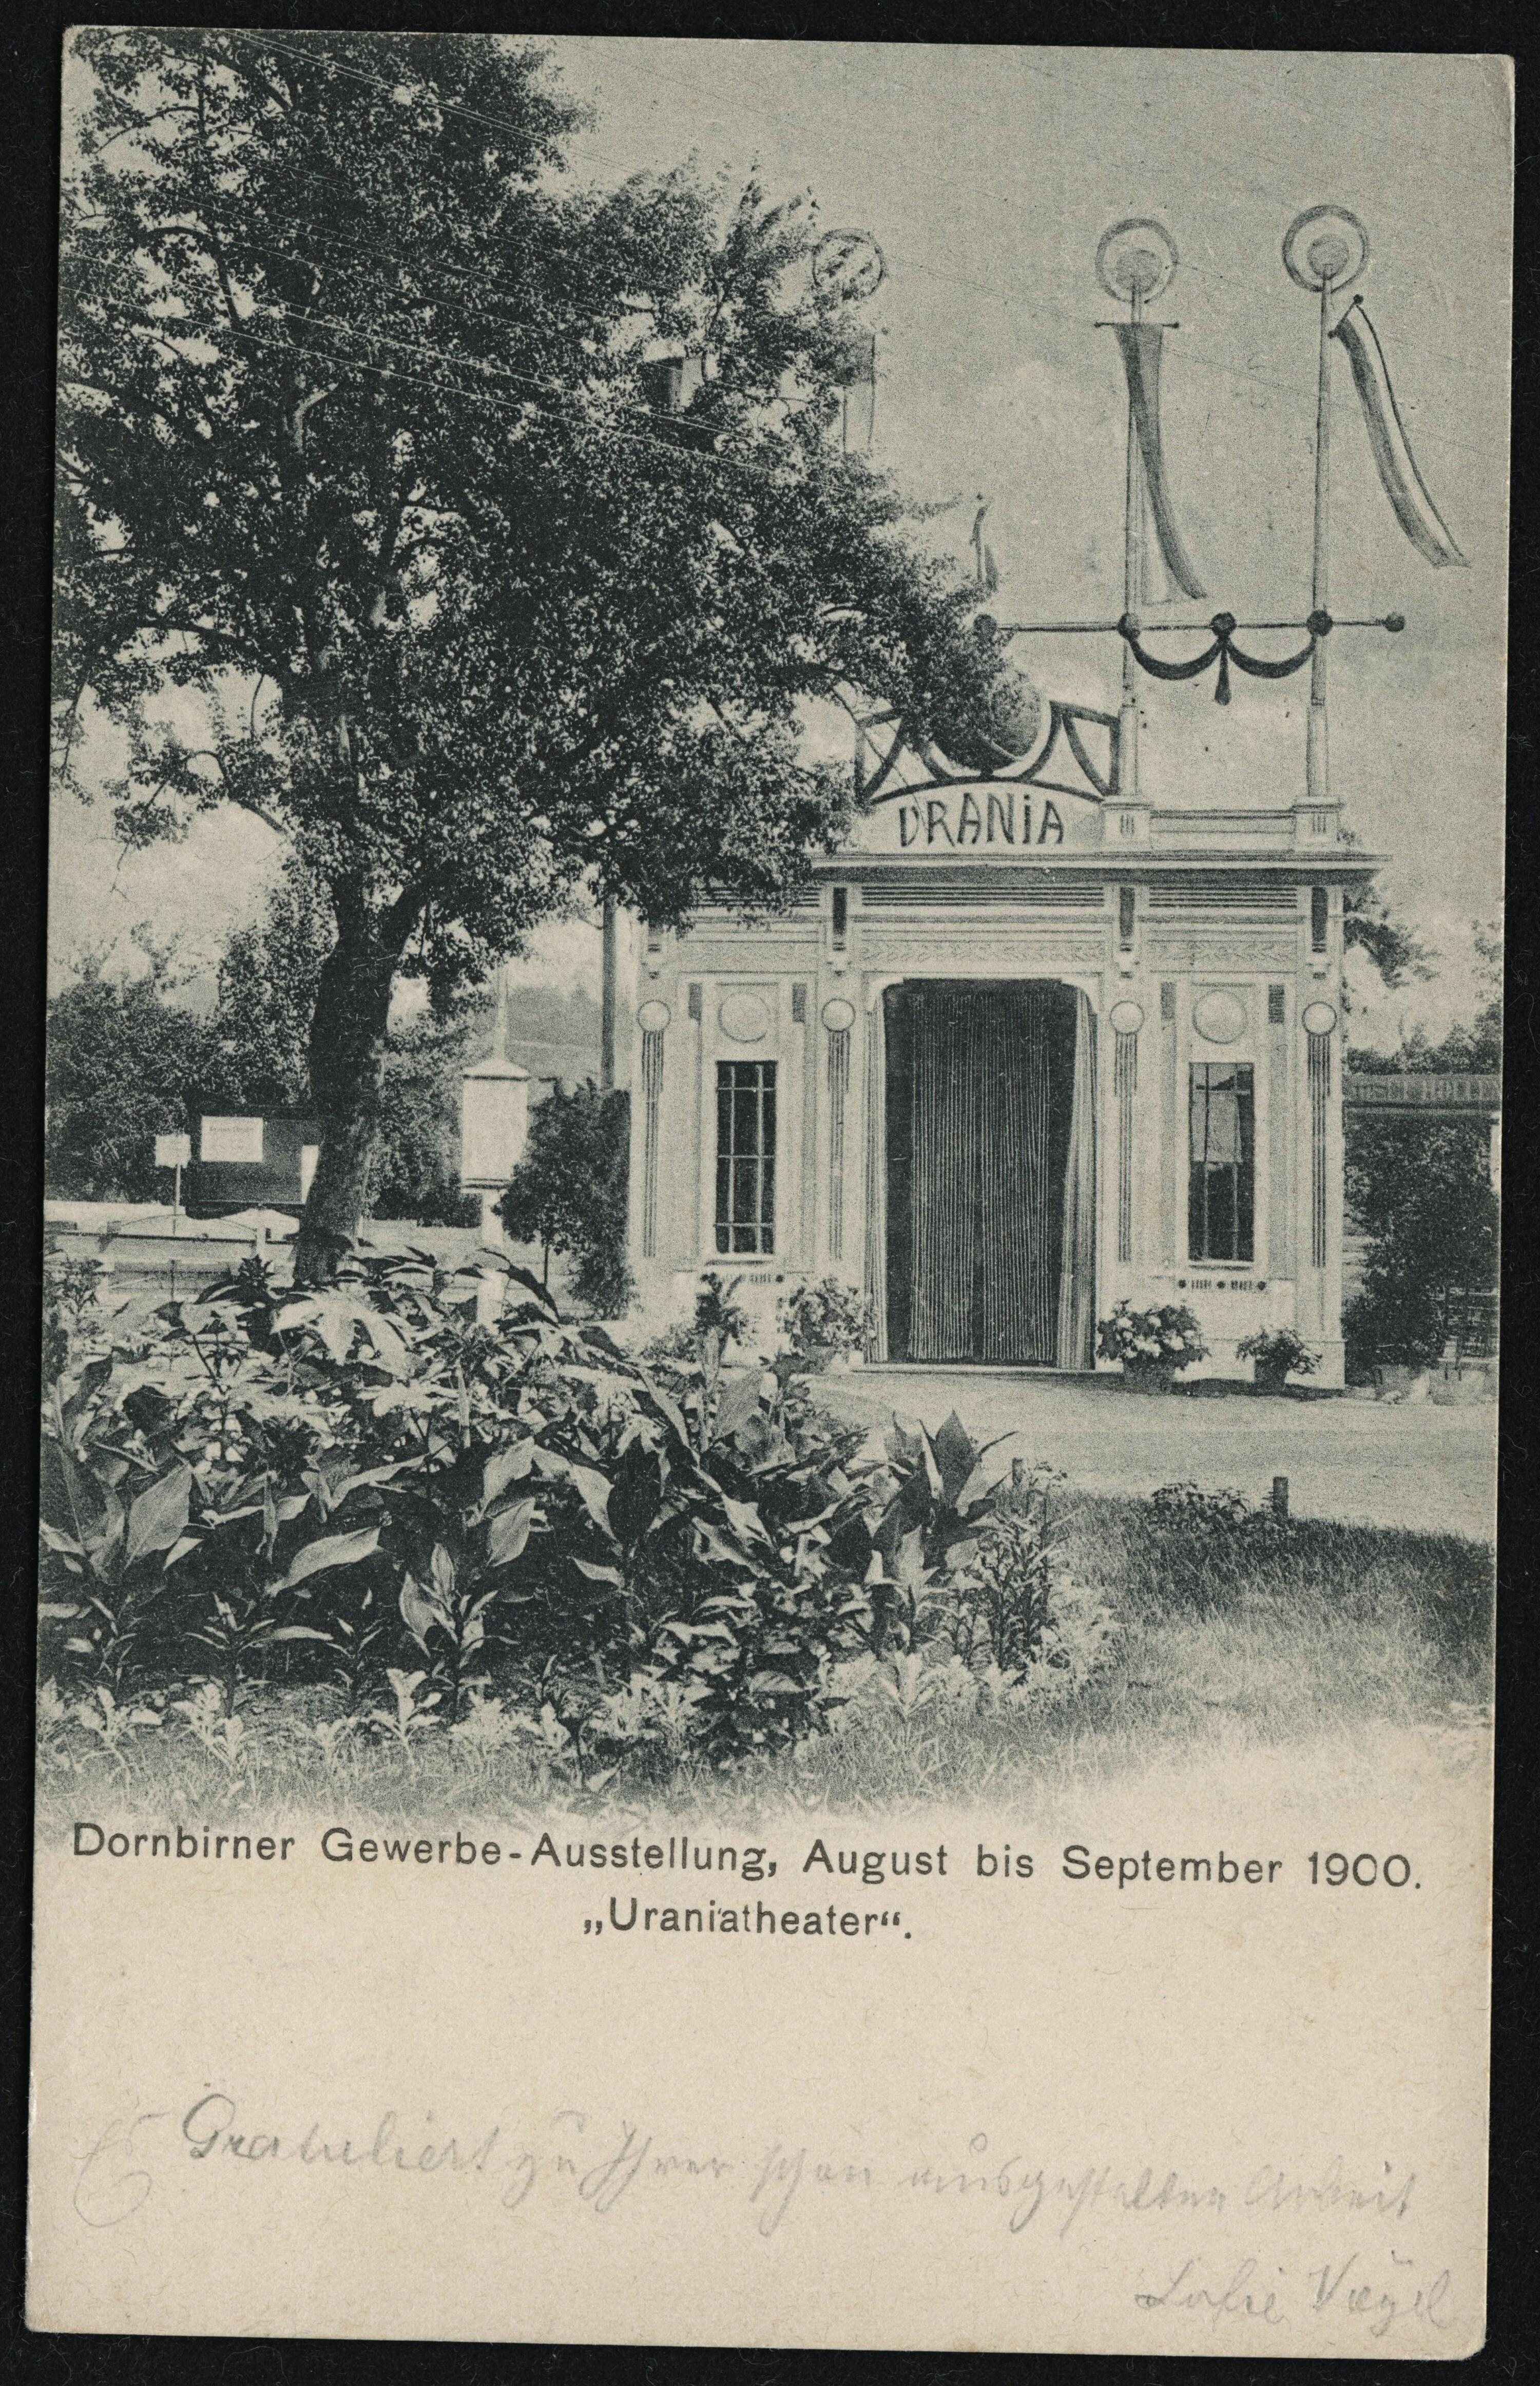 Dornbirner Gewerbe-Ausstellung, August bis September 1900></div>


    <hr>
    <div class=